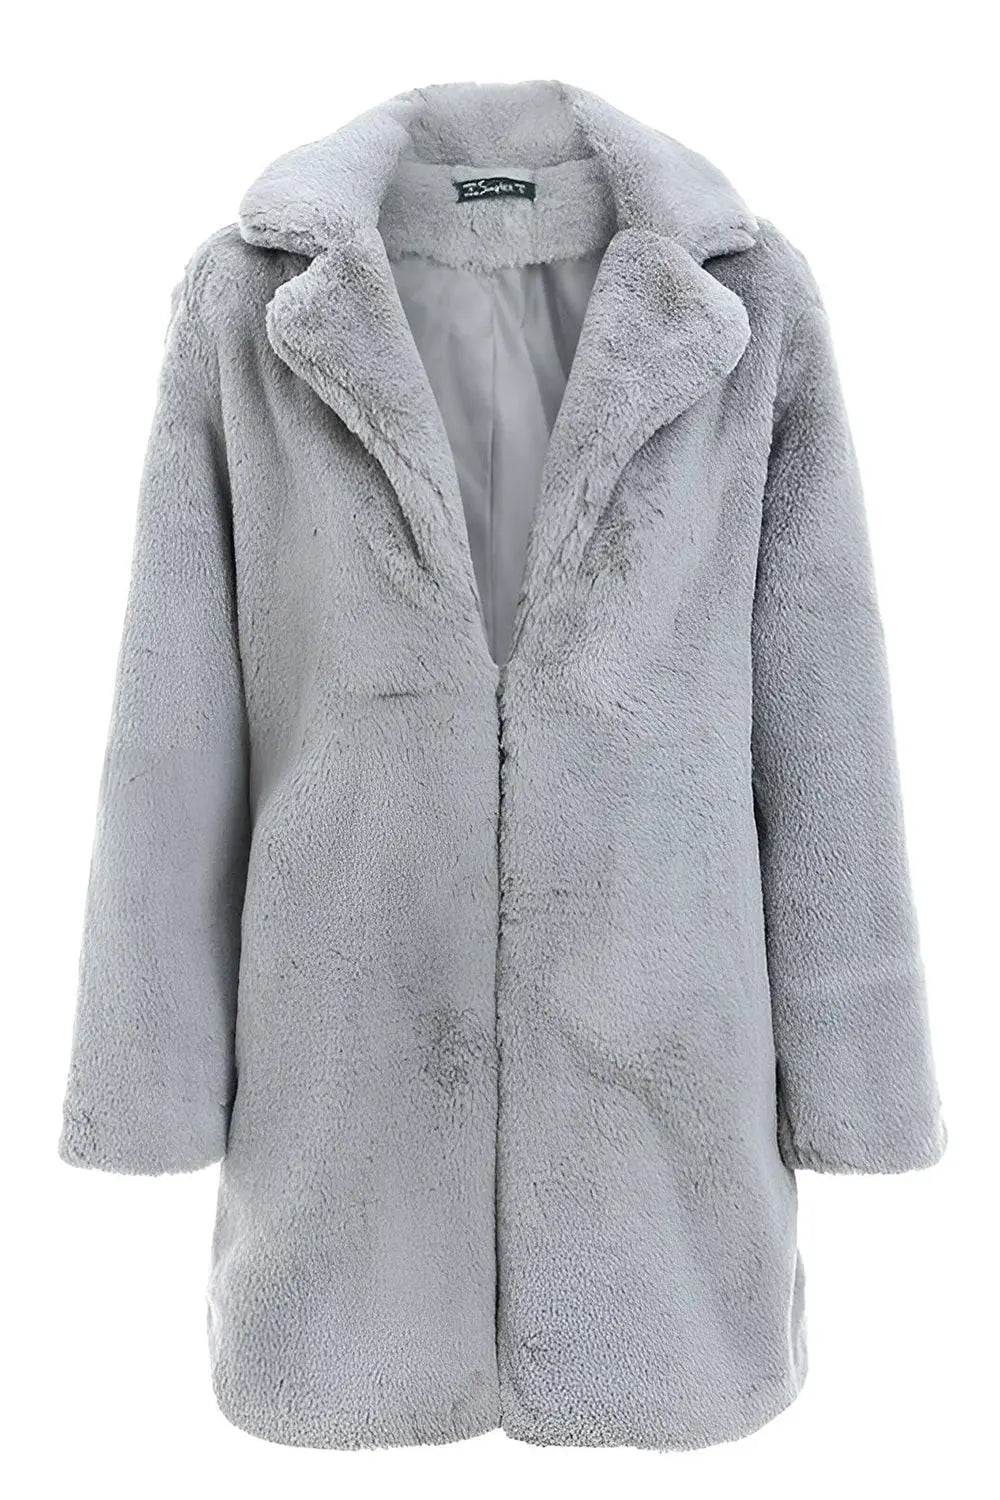 Fur Coat Streetwear - Gray - Strange Clothes